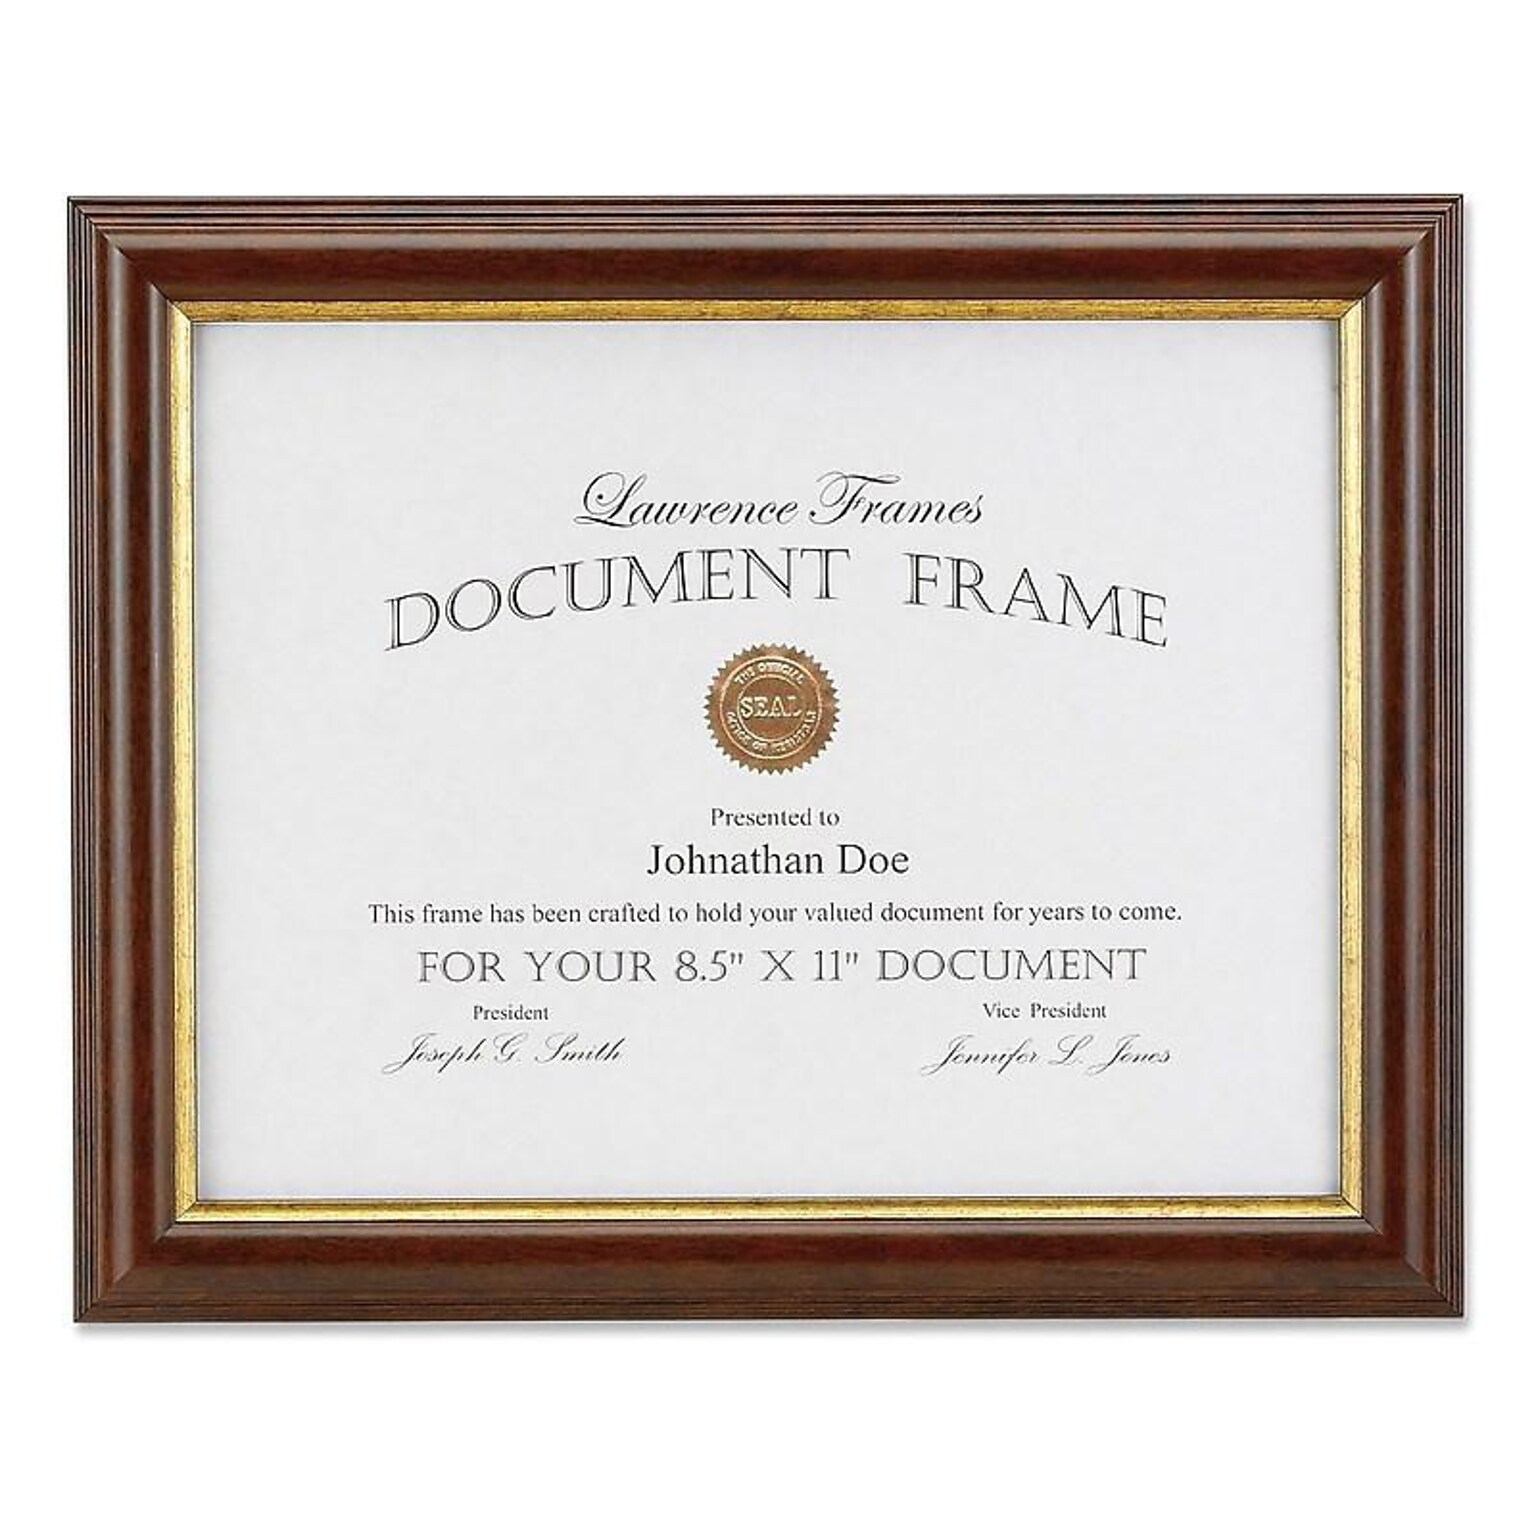 Lawrence Frames Wood Certificate Frame, Walnut (185181)